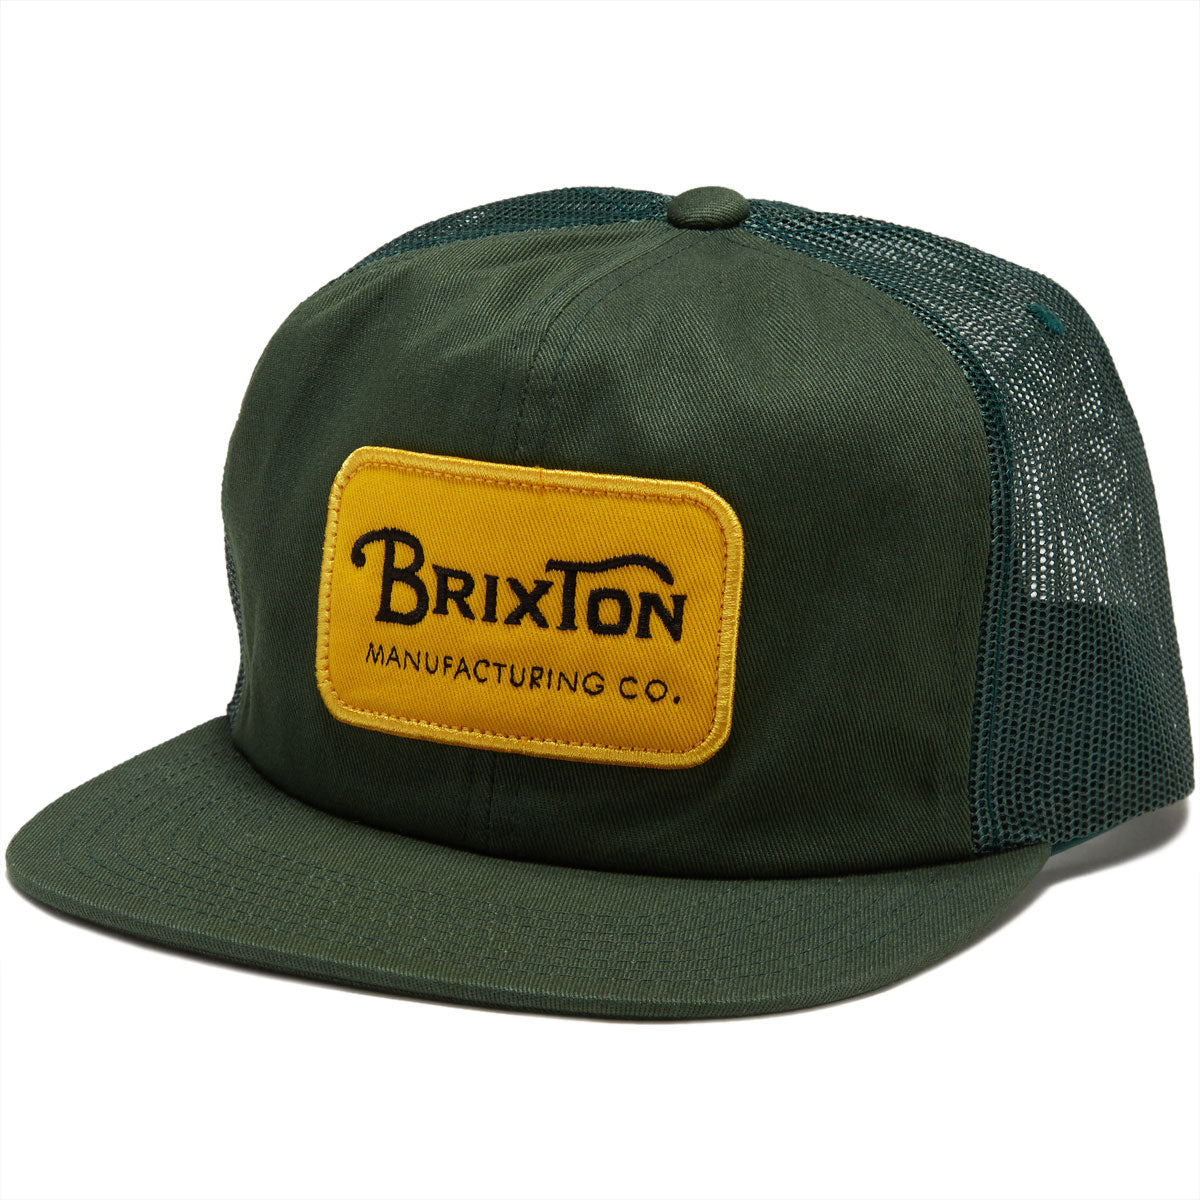 Brixton Grade Hp Trucker Hat - Trekking Green/Trekking Green image 1